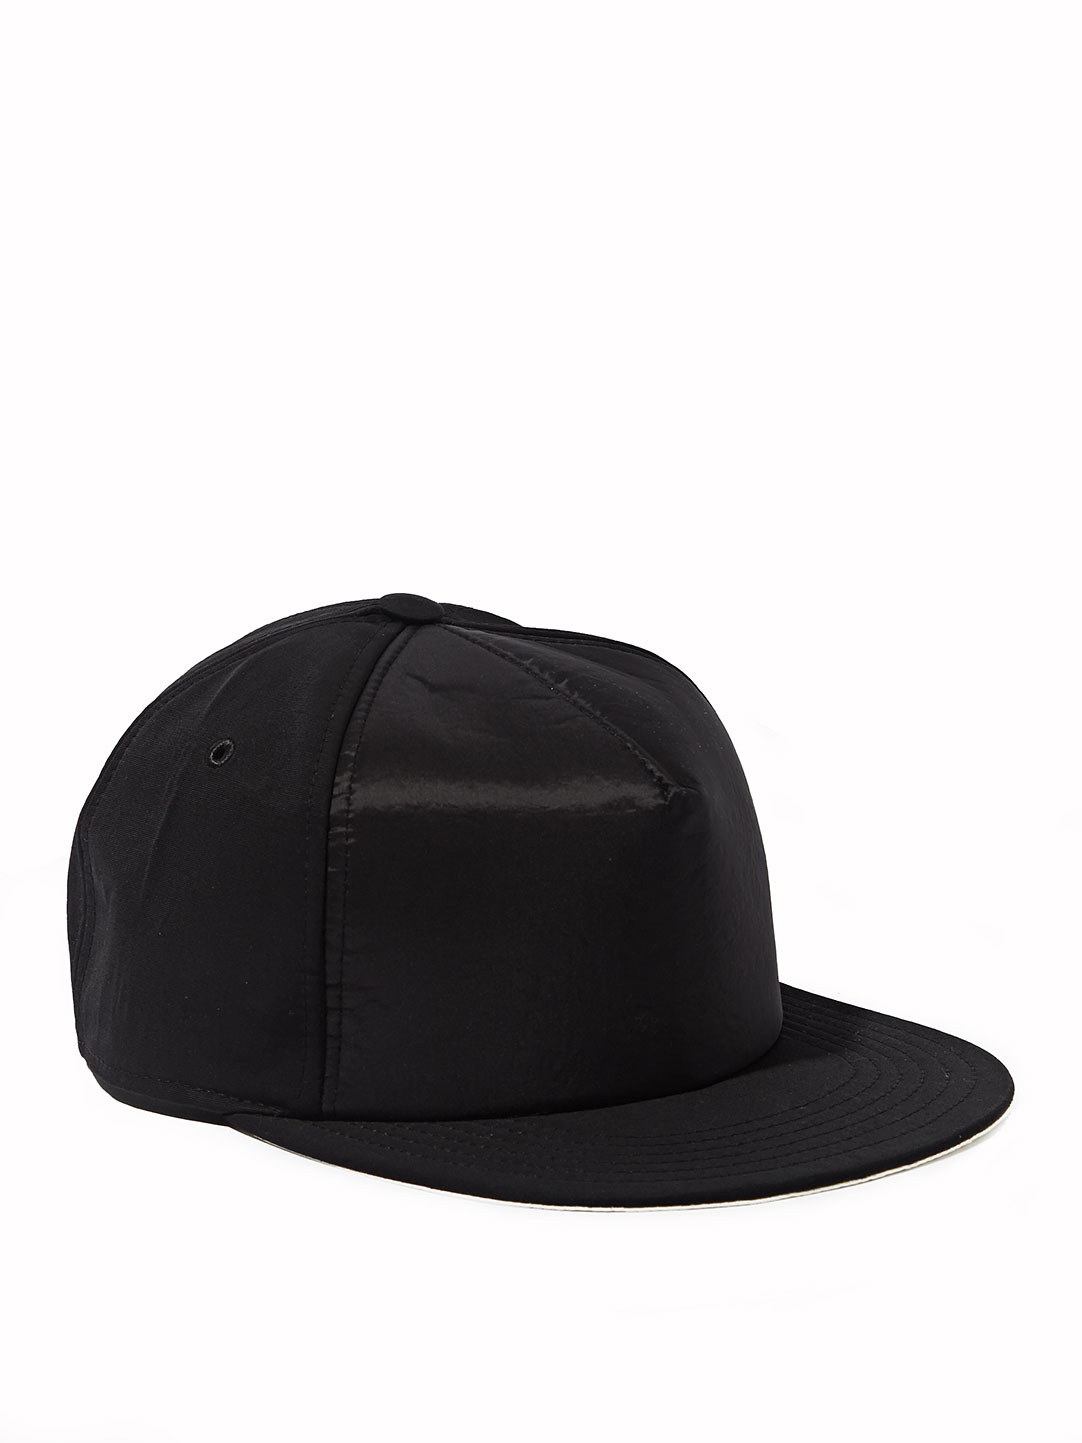 Lyst - Drkshdw by rick owens Snapback Hat in Black for Men